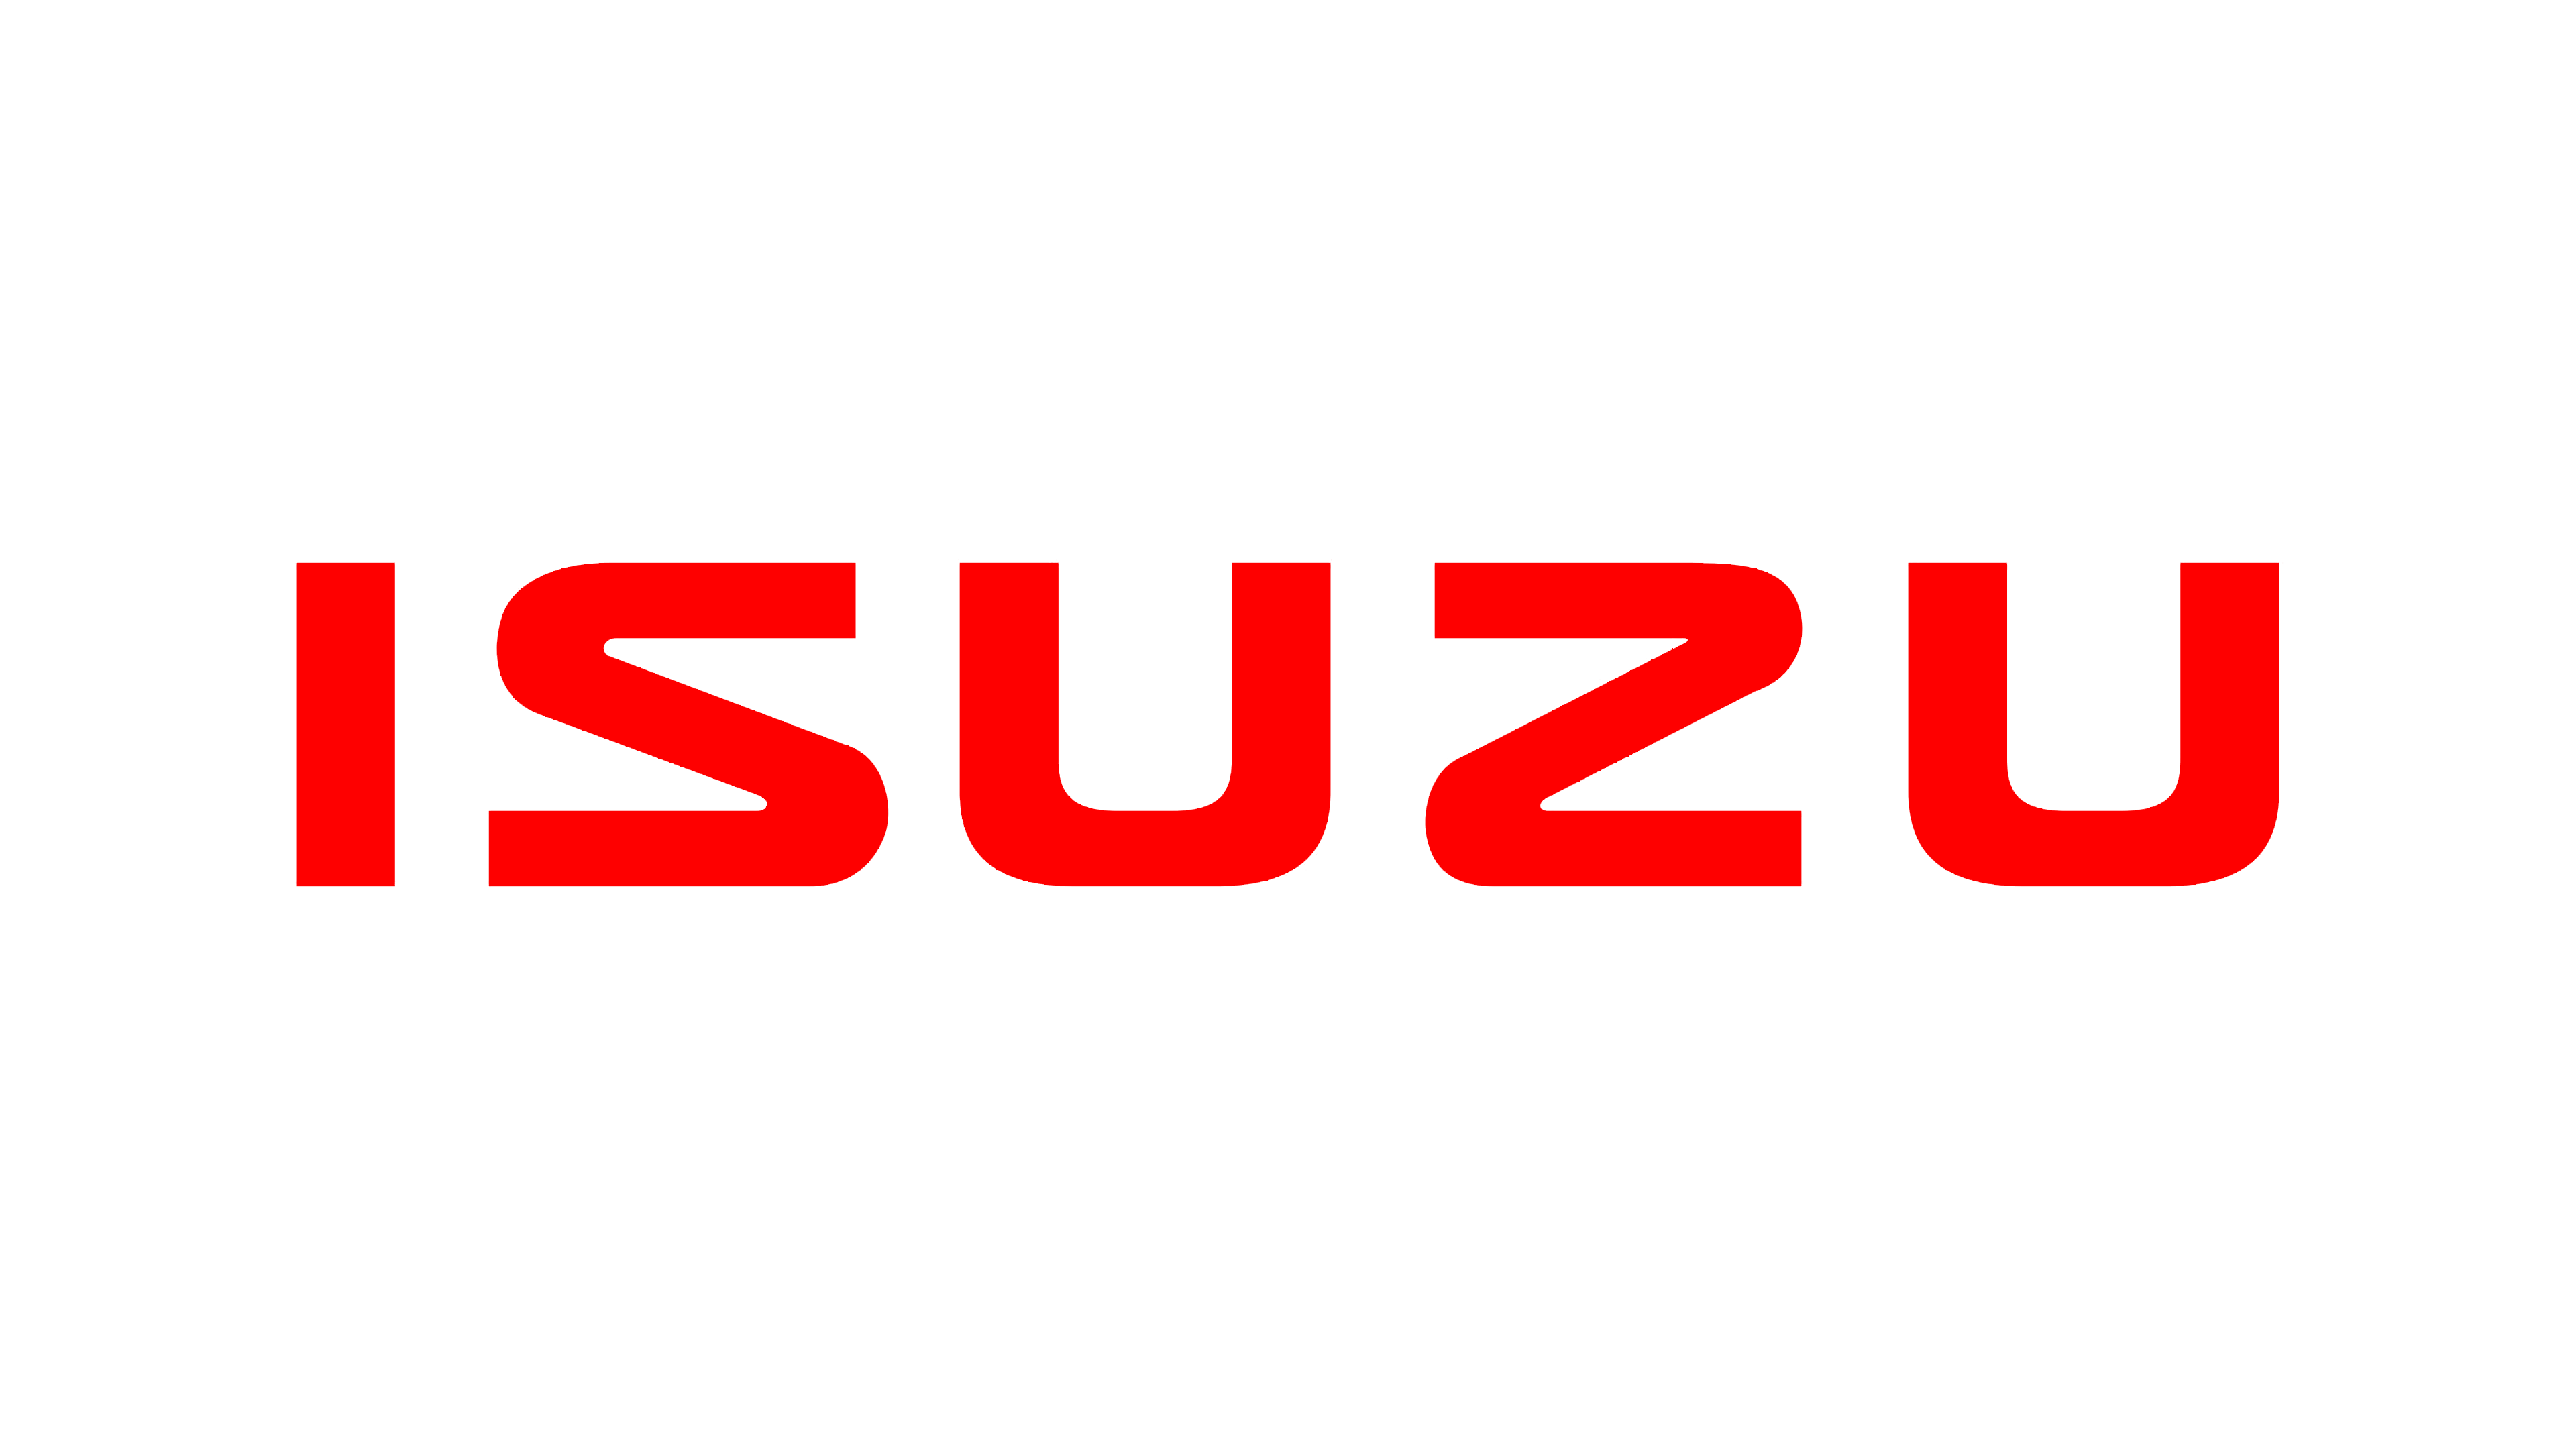 ISUZU легендарный бренд грузовых автомобилей